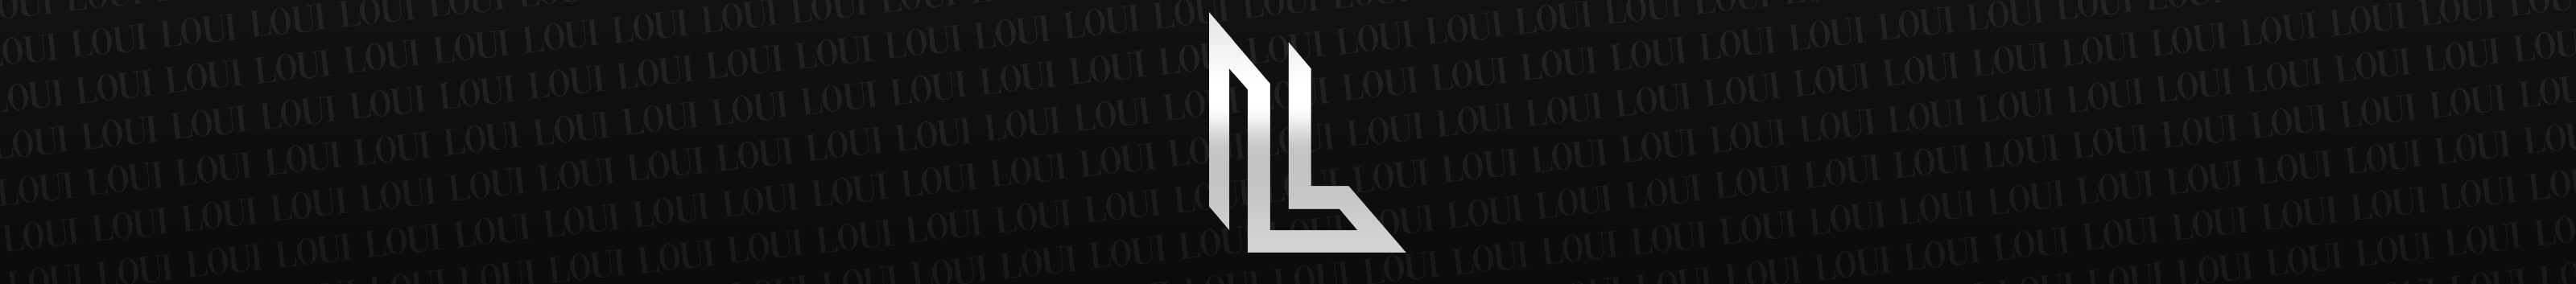 Loui .'s profile banner